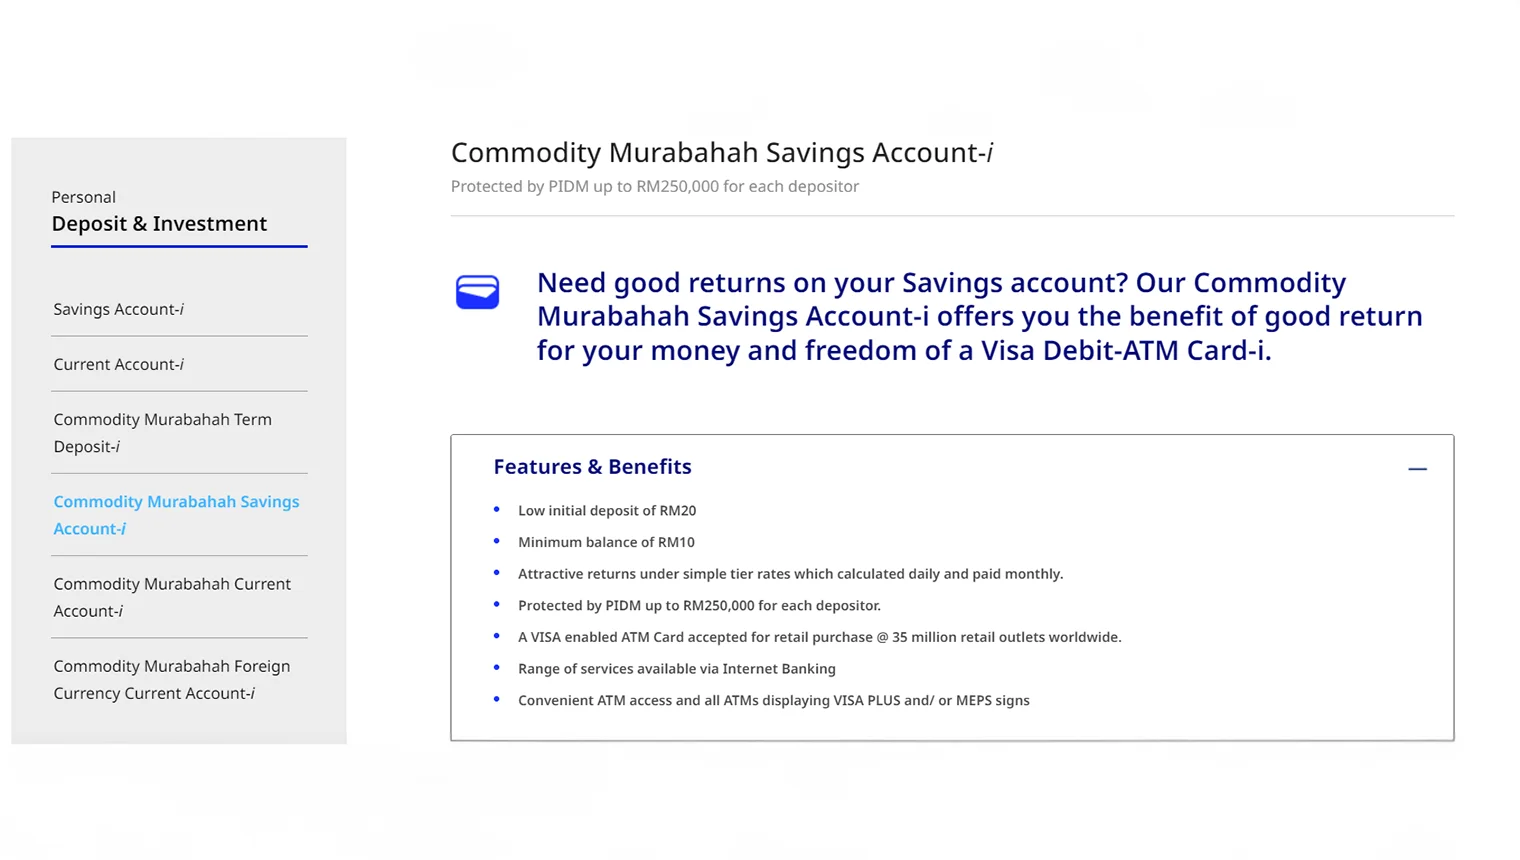 Rize Commodity Murabahah Savings Account-i